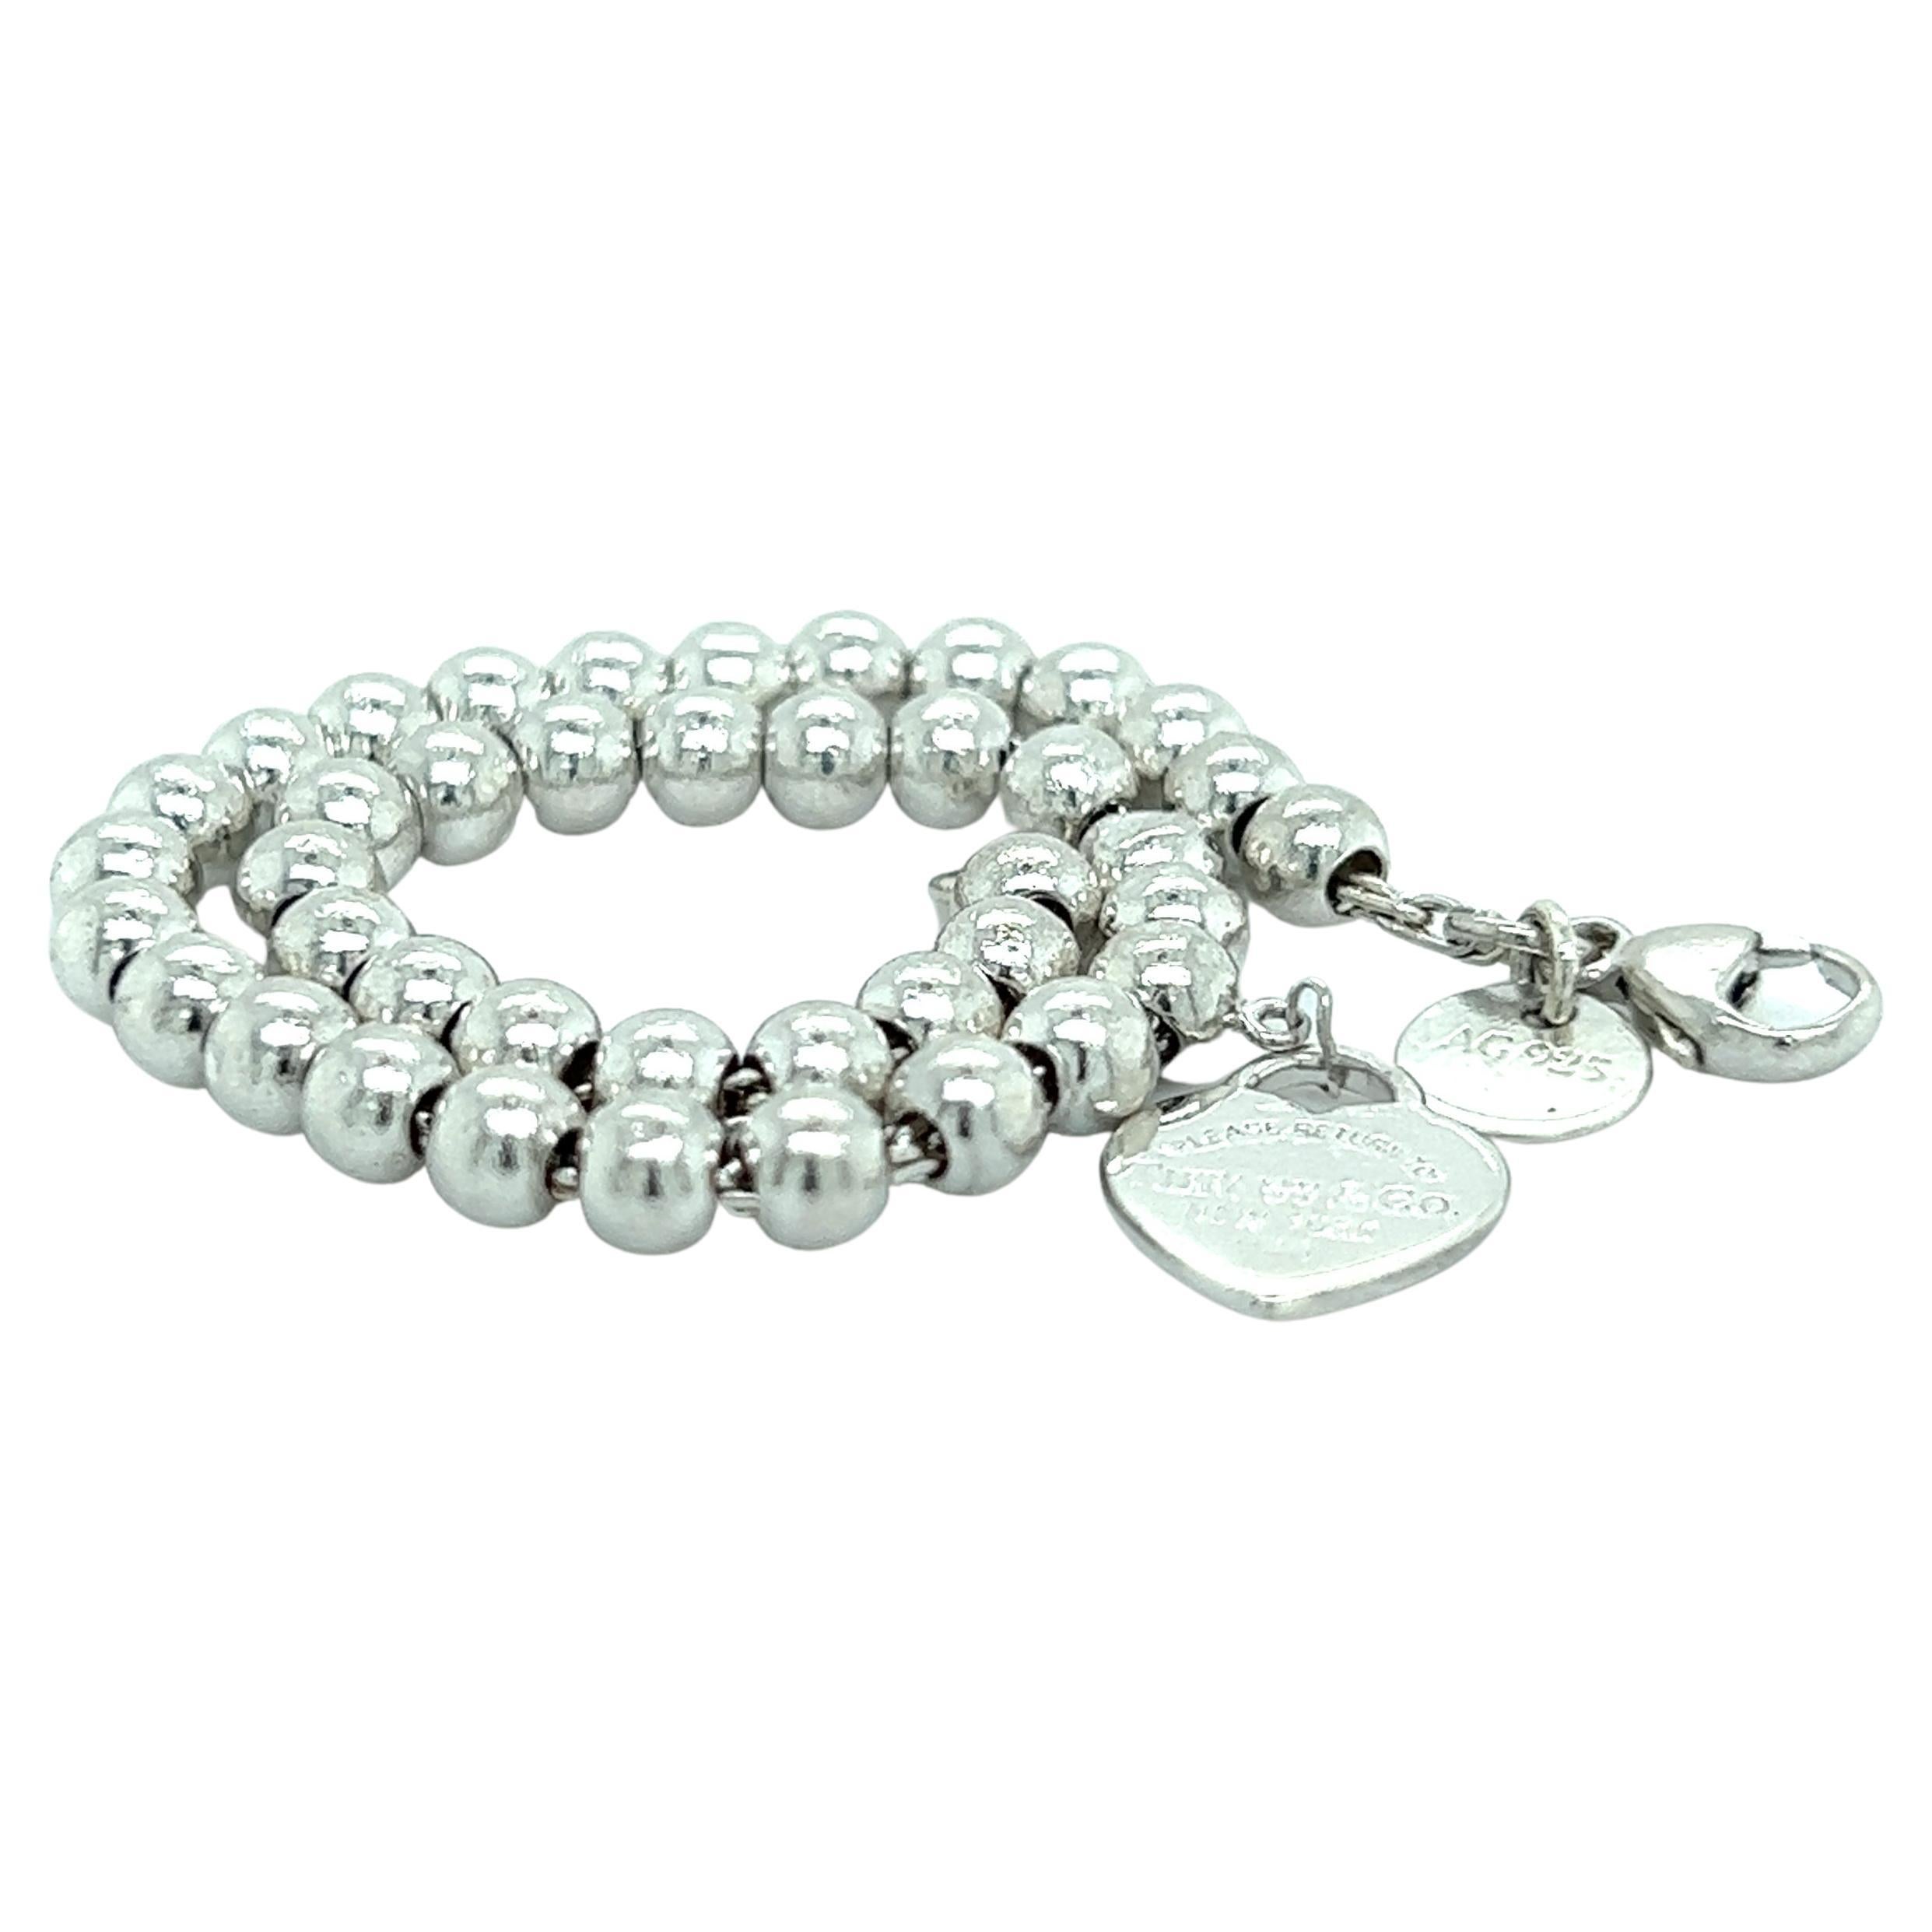 Authentic Tiffany & Co. Sterling Silver Vintage 10mm Ball Bead Bracelet 7  1/2” | eBay